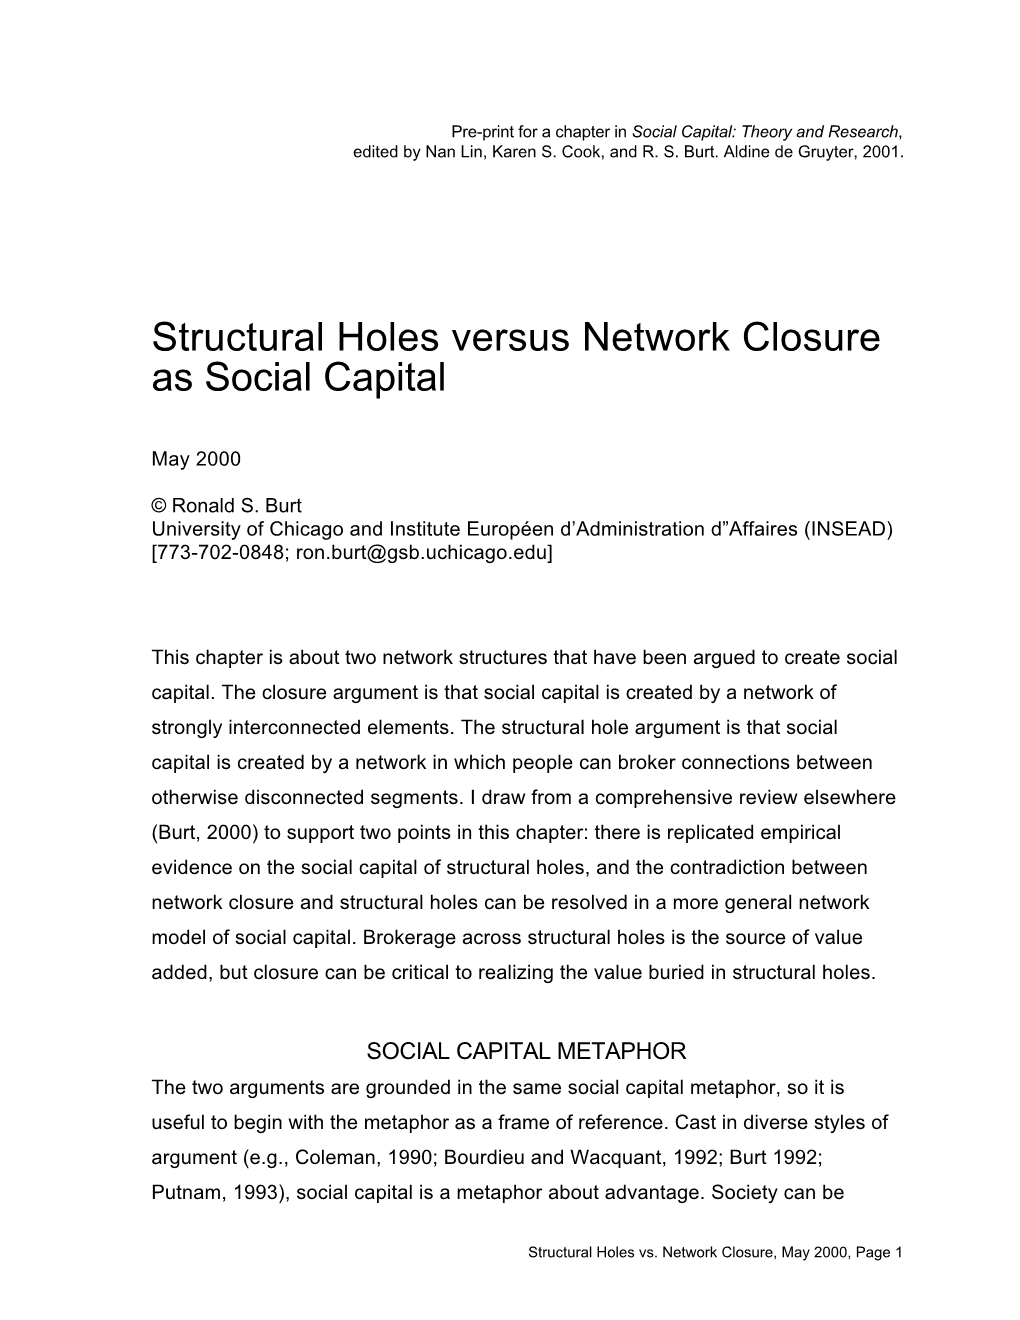 Structural Holes Versus Network Closure As Social Capital